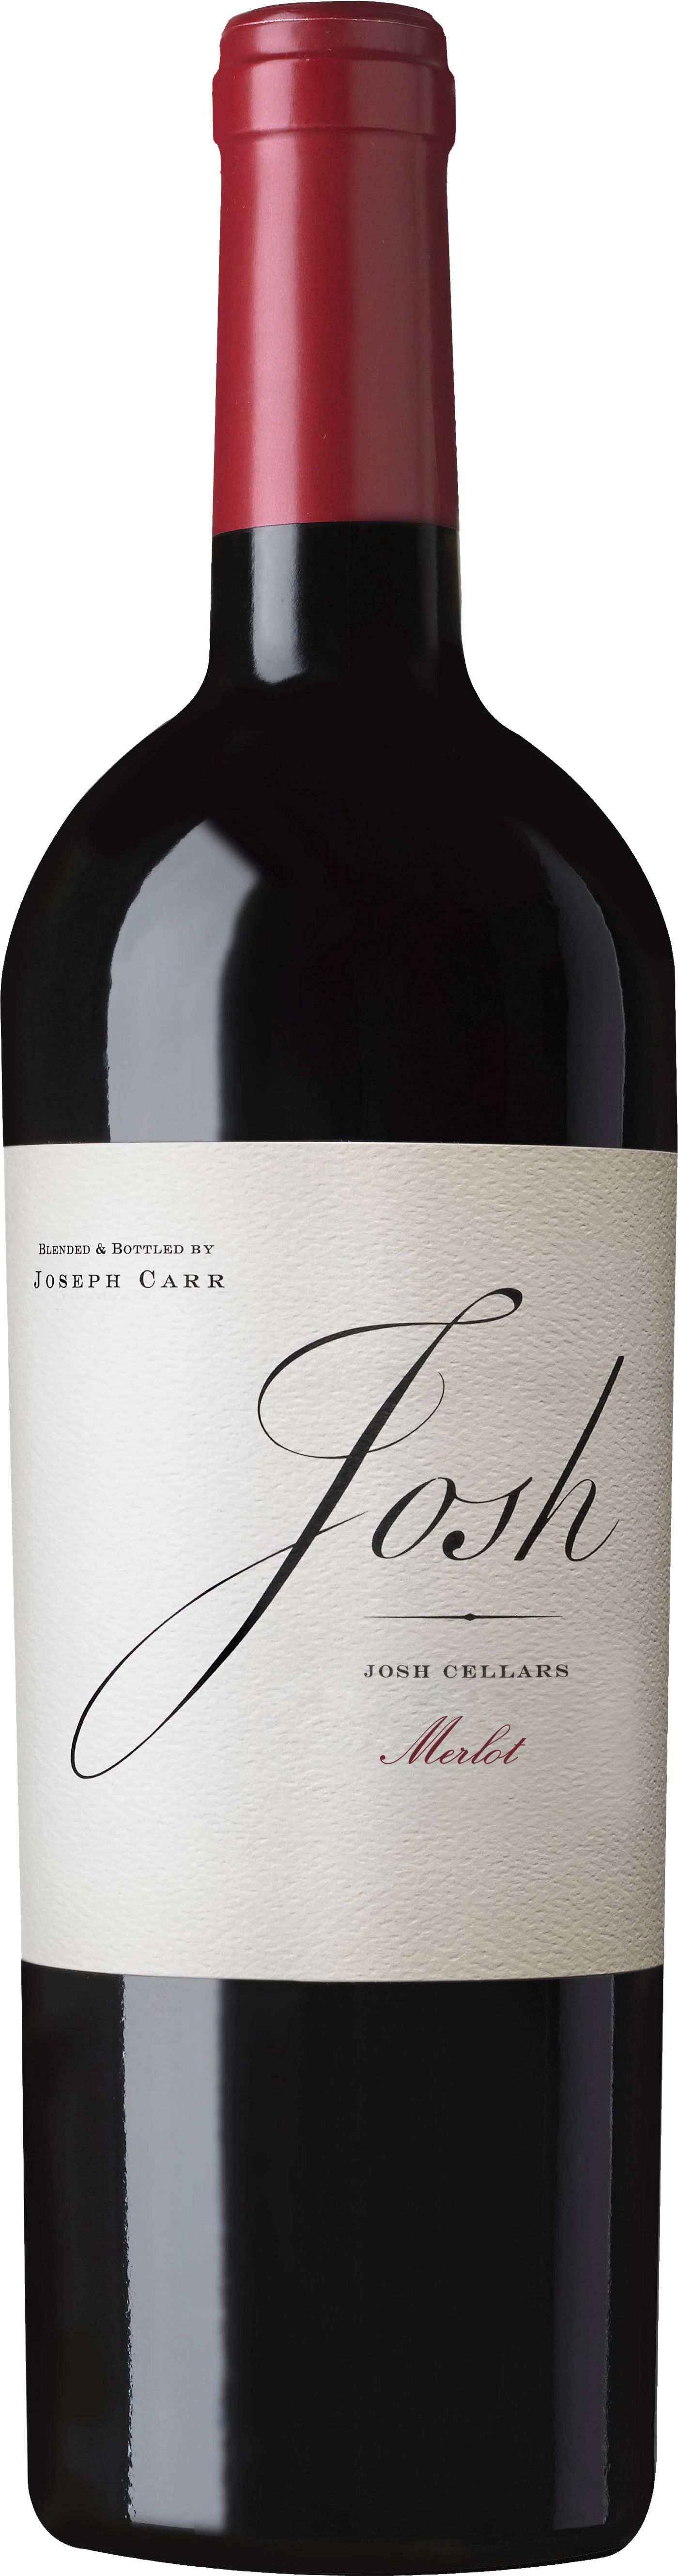 JOSH CELLAR MERLOT - Bk Wine Depot Corp